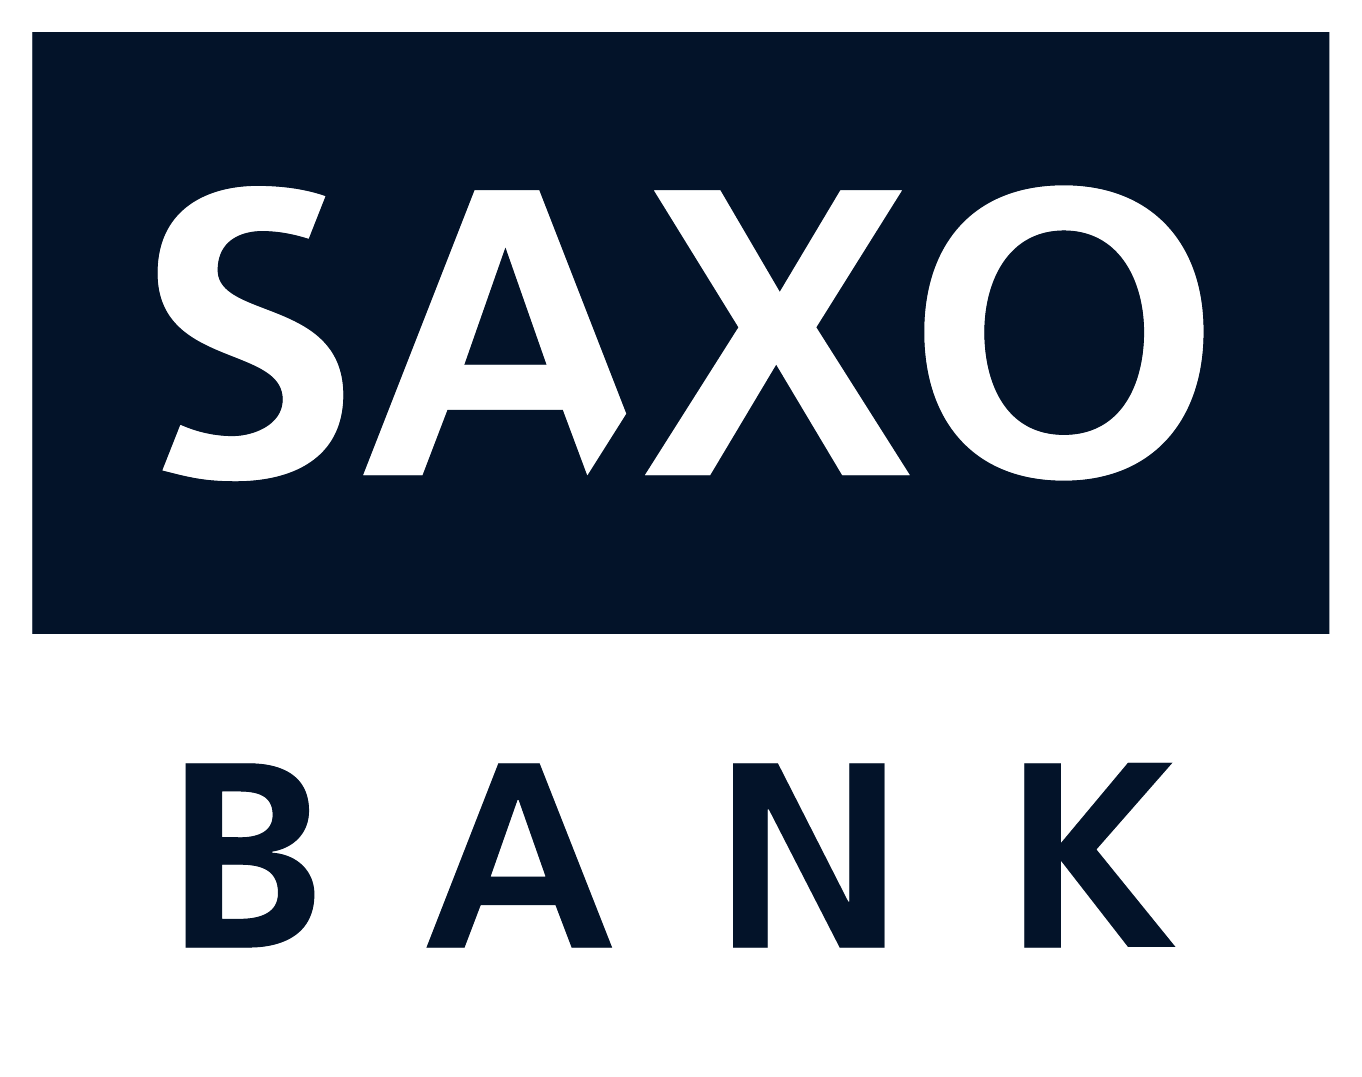 Saxo Bank Logo